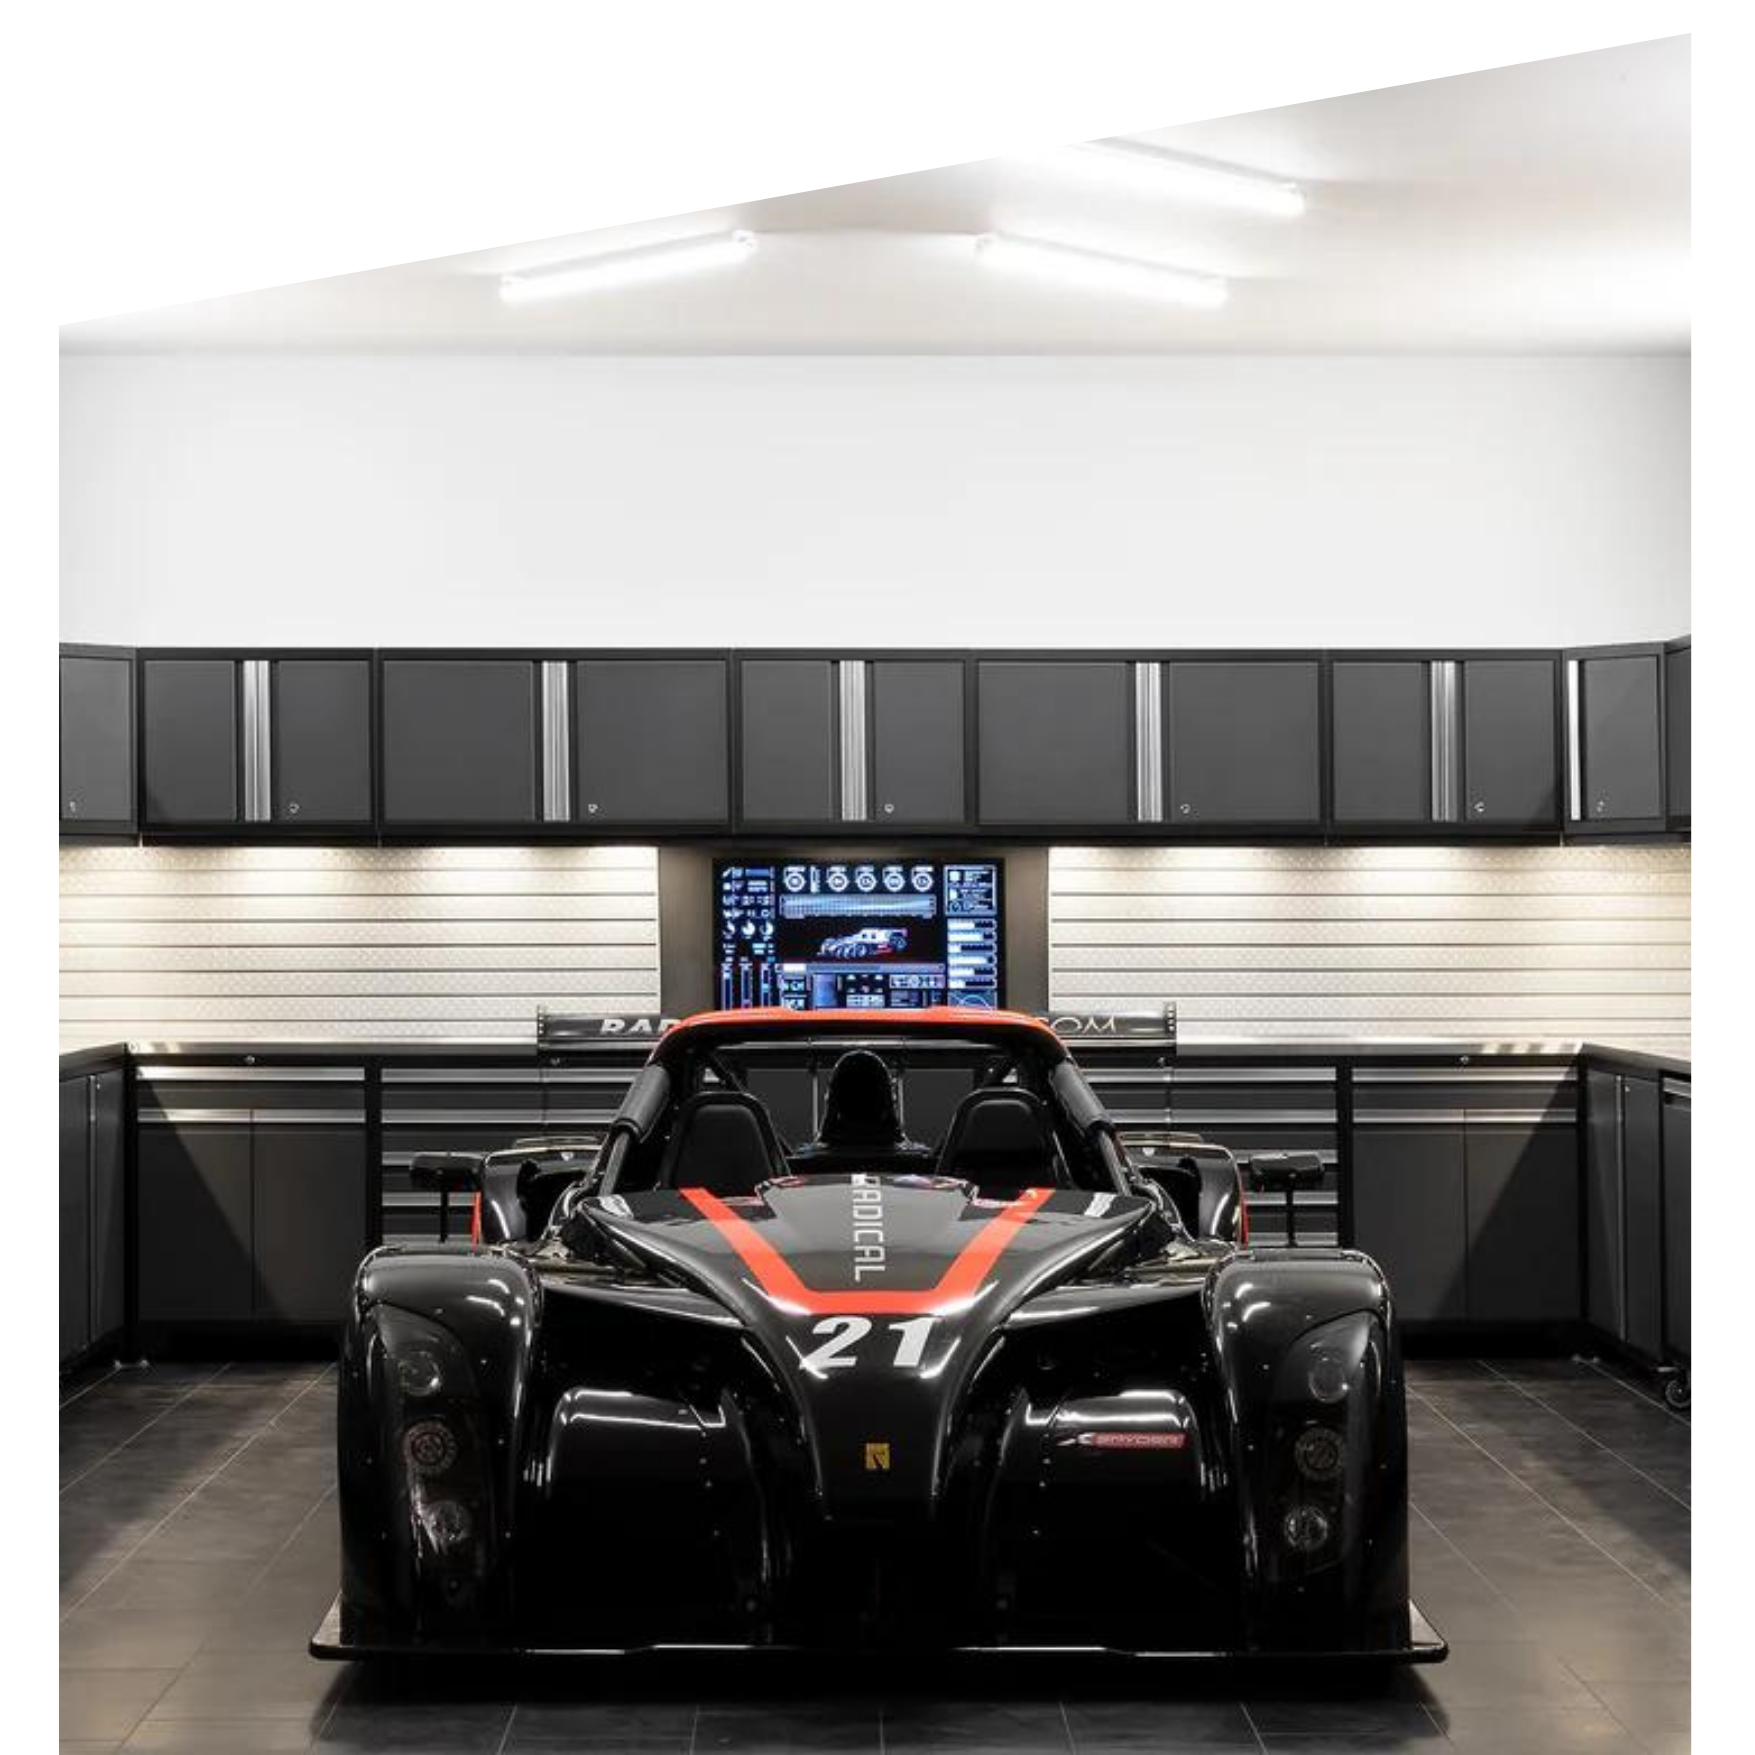 Modern dark garage with cabinets and sports car